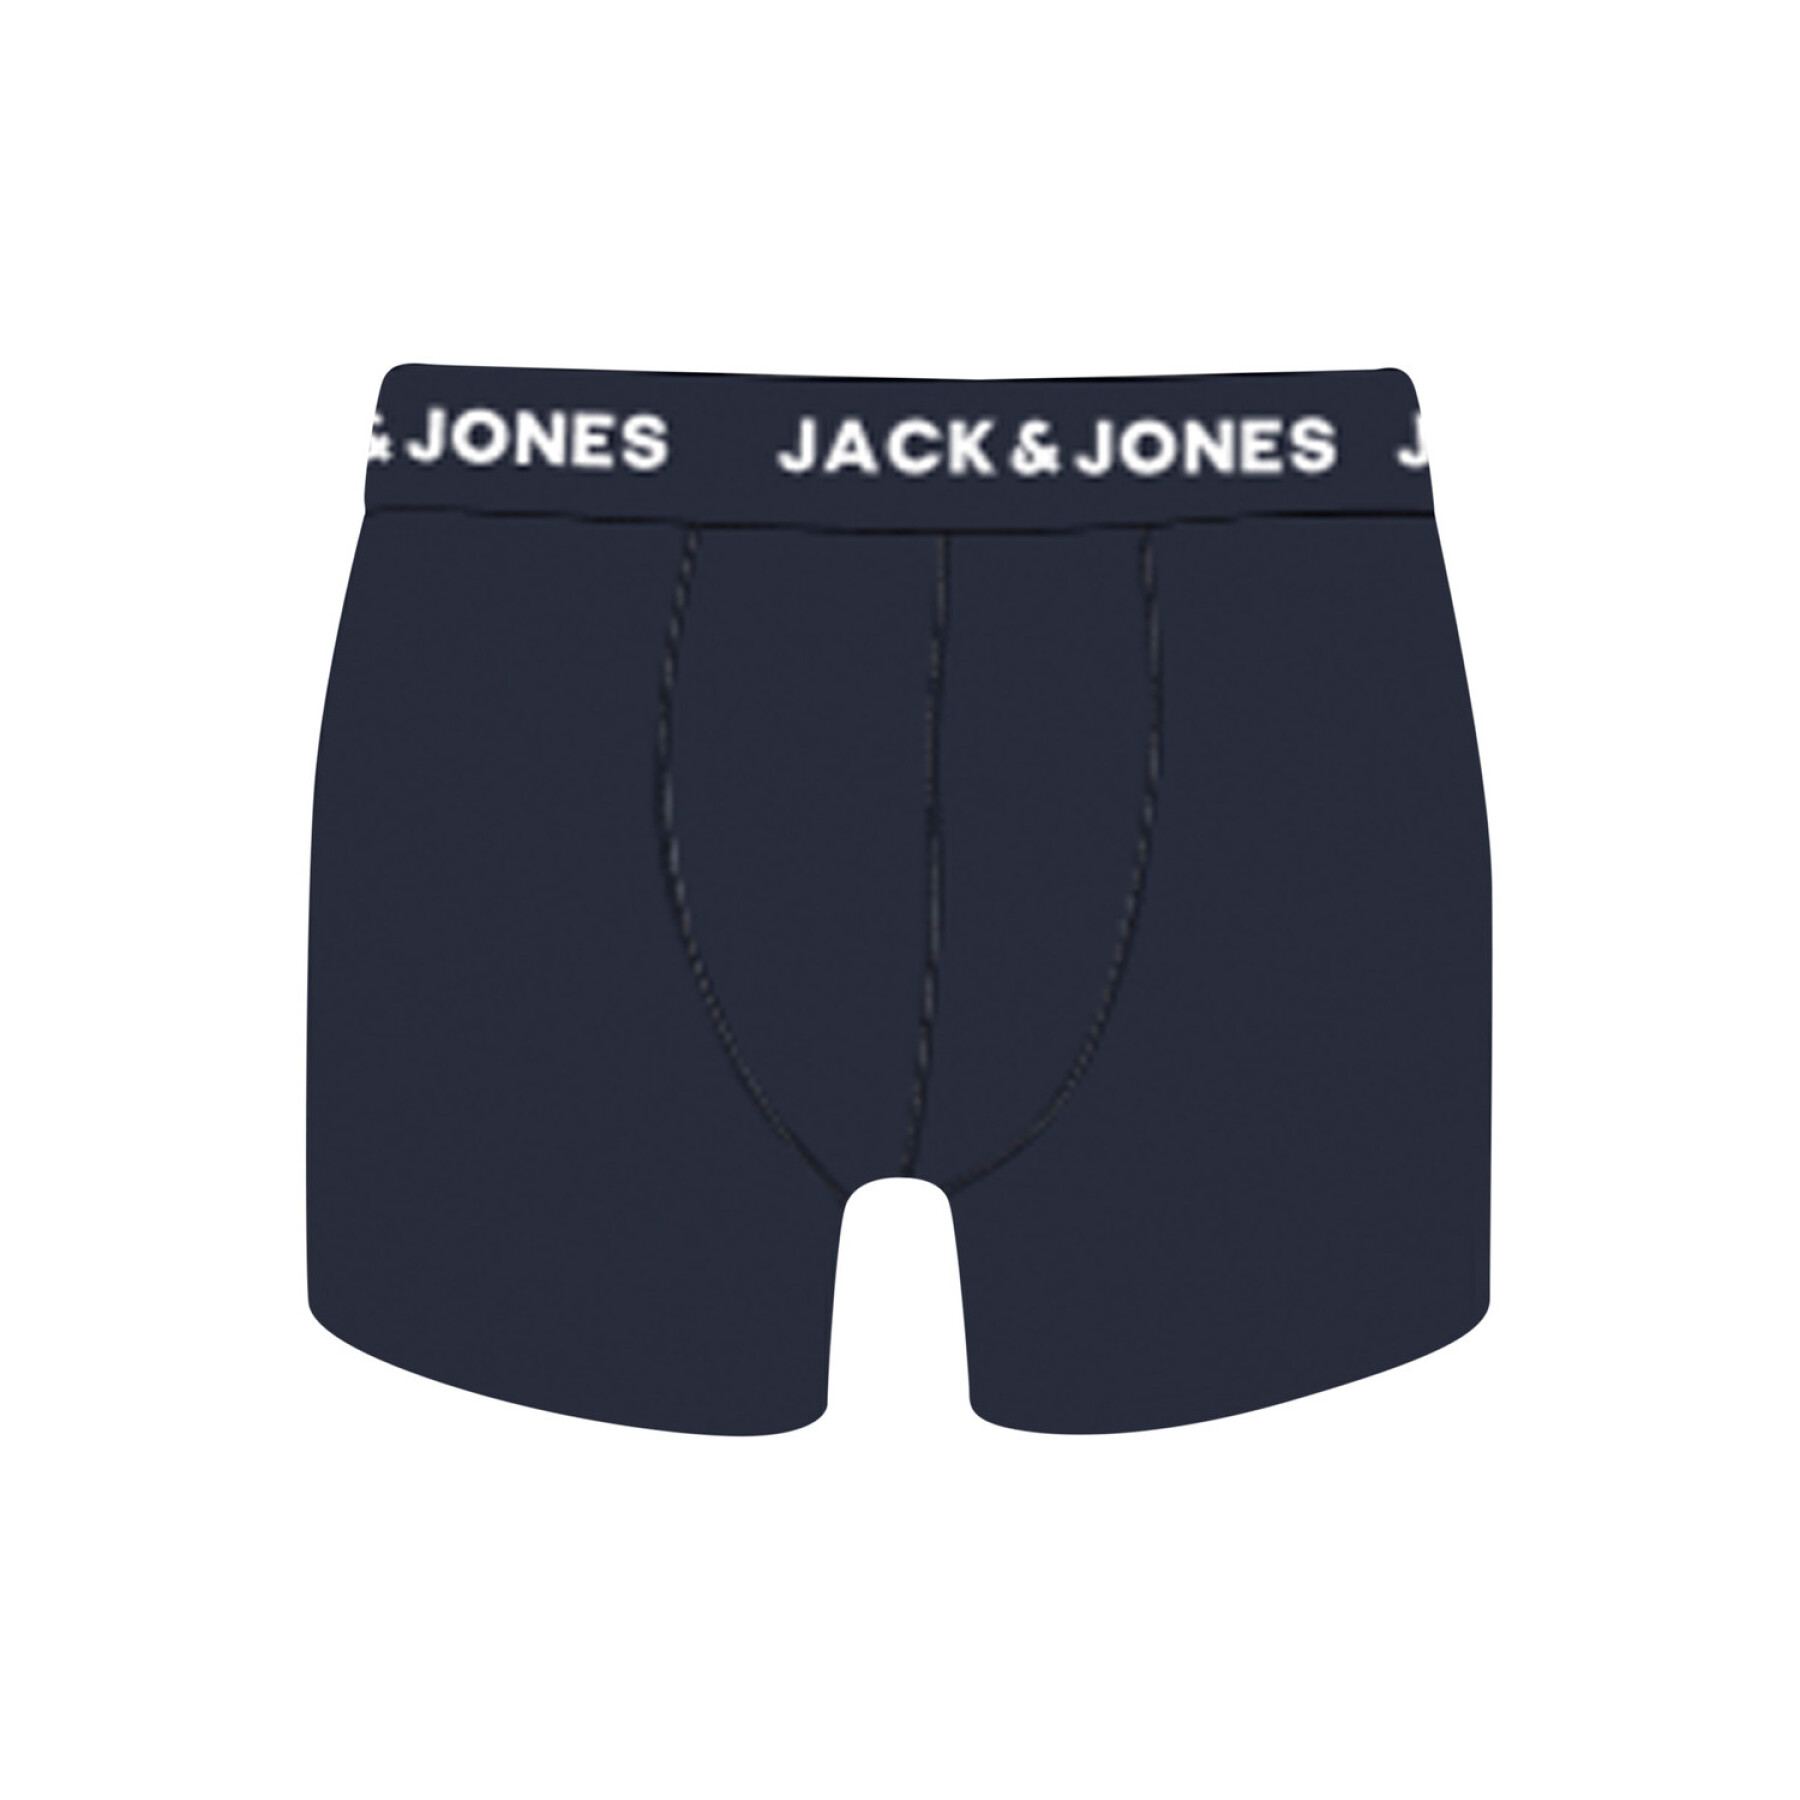 Calções boxer Jack & Jones Solid (x10)